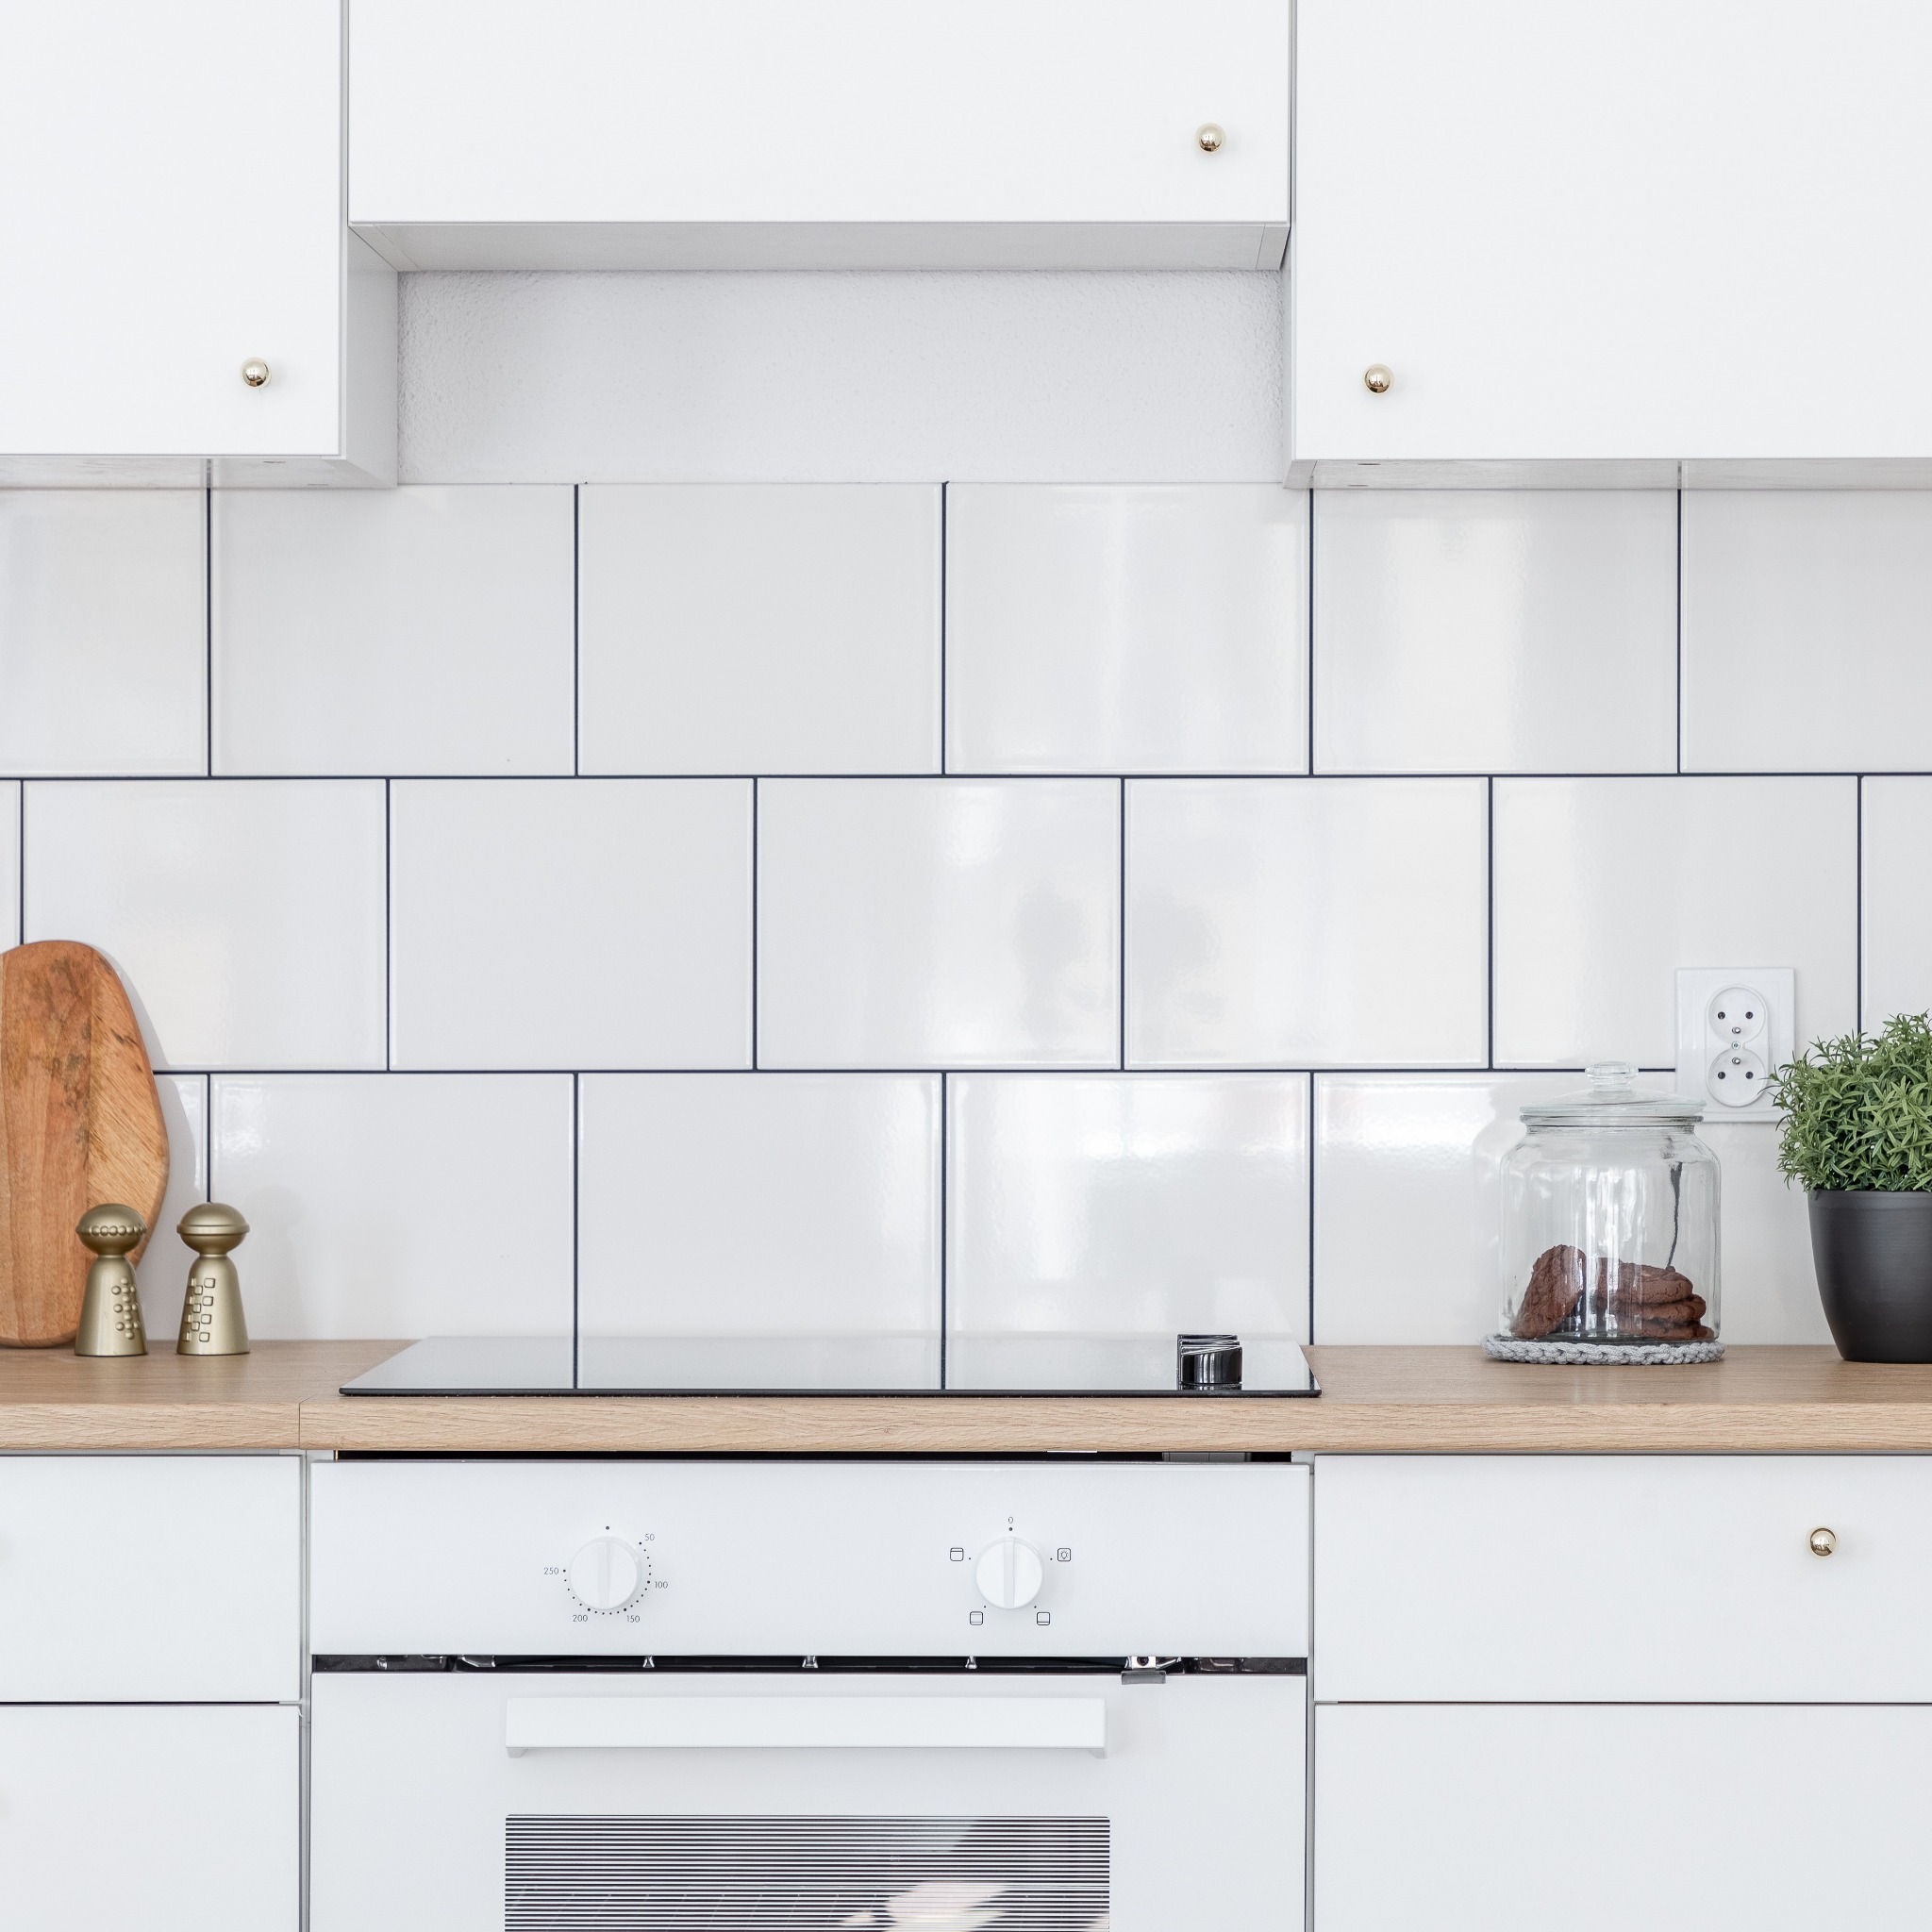 A white kitchen with a square tile backsplash/